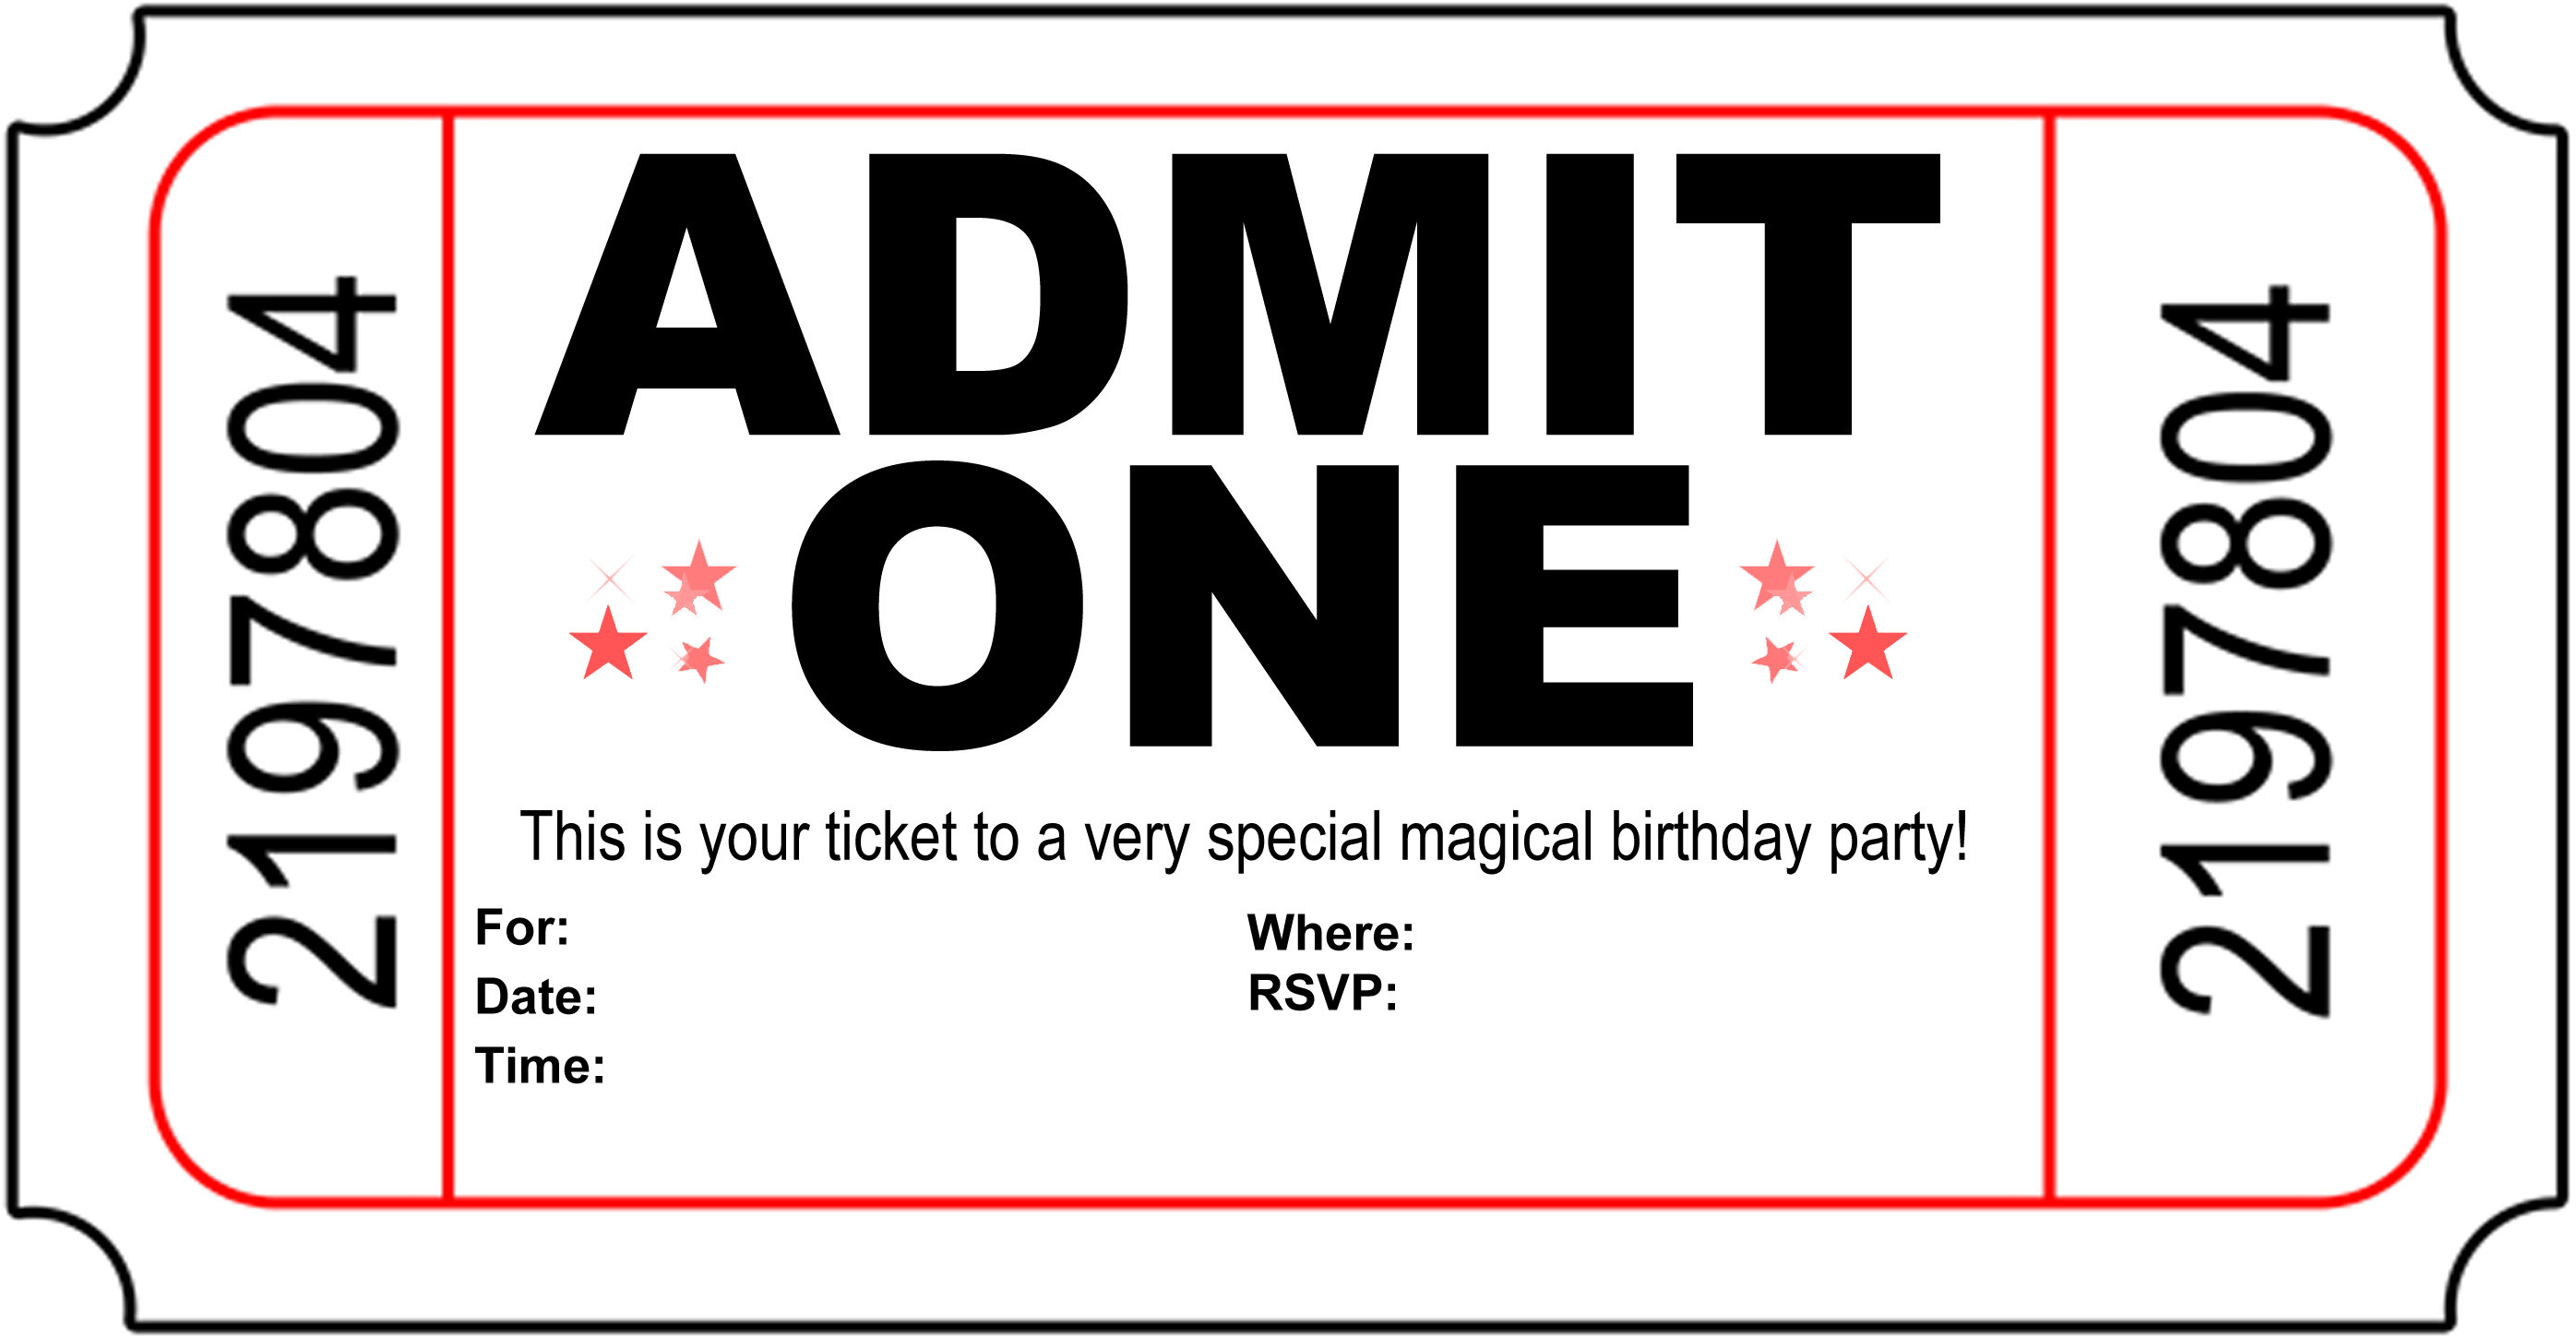 Best ideas about Free Printable Birthday Invitations
. Save or Pin Free Printable Birthday Party Invitations Kansas Magician Now.